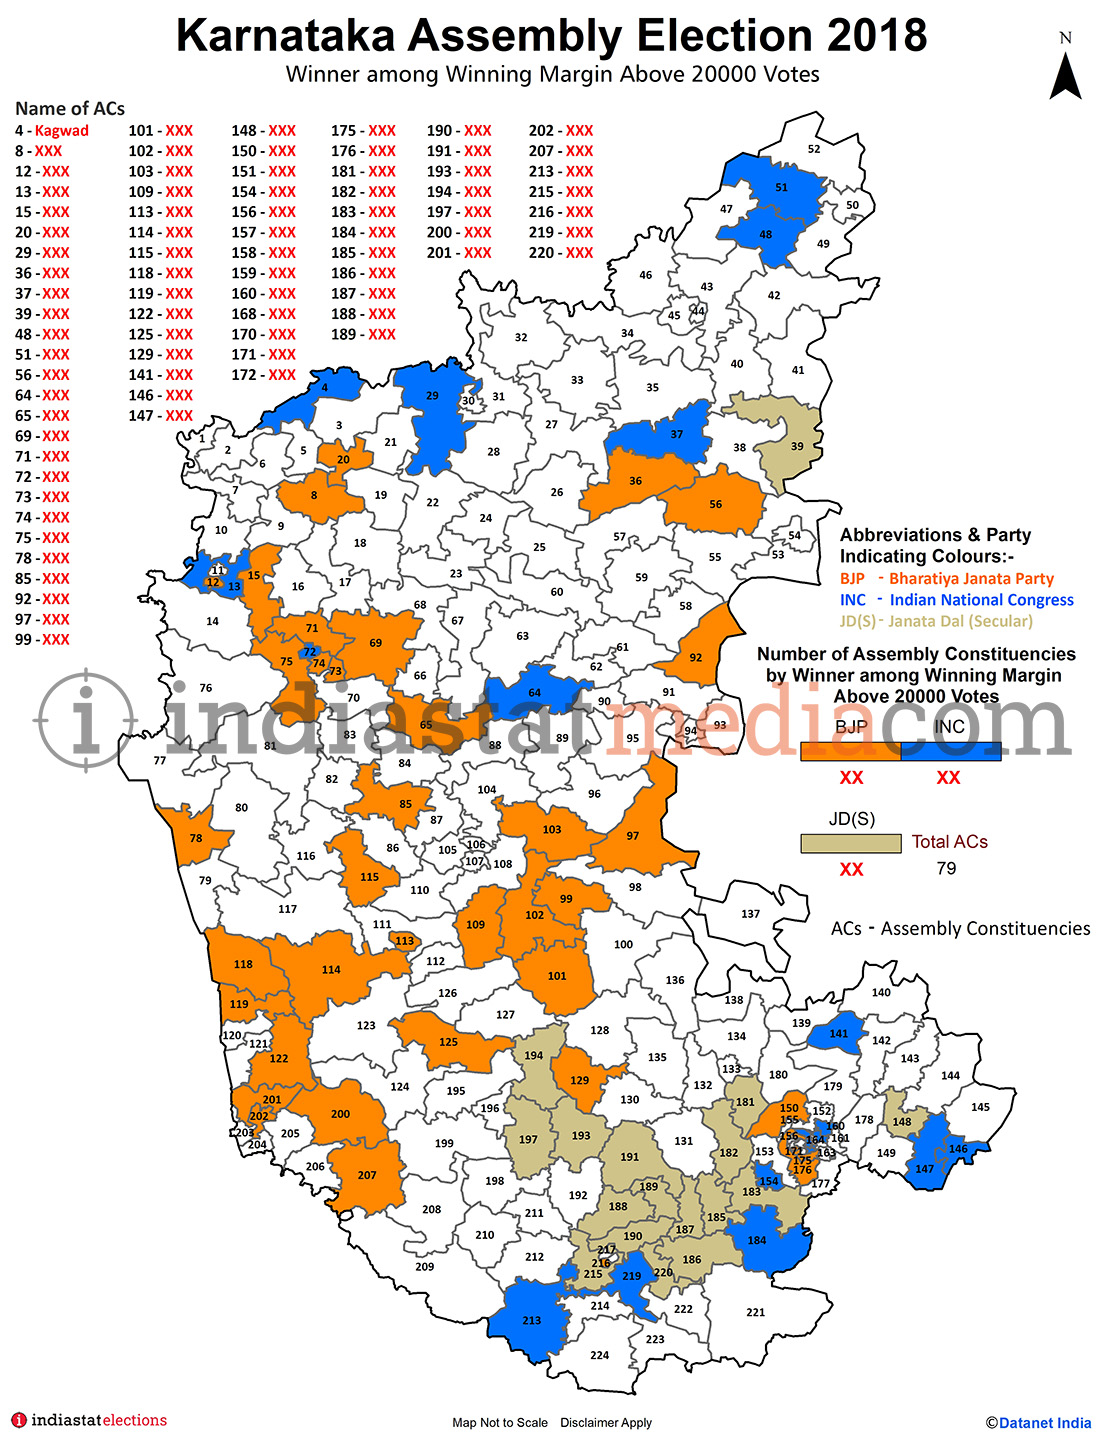 Winner among Winning Margin Above 20000 Vote in Karnataka Assembly Election - 2018